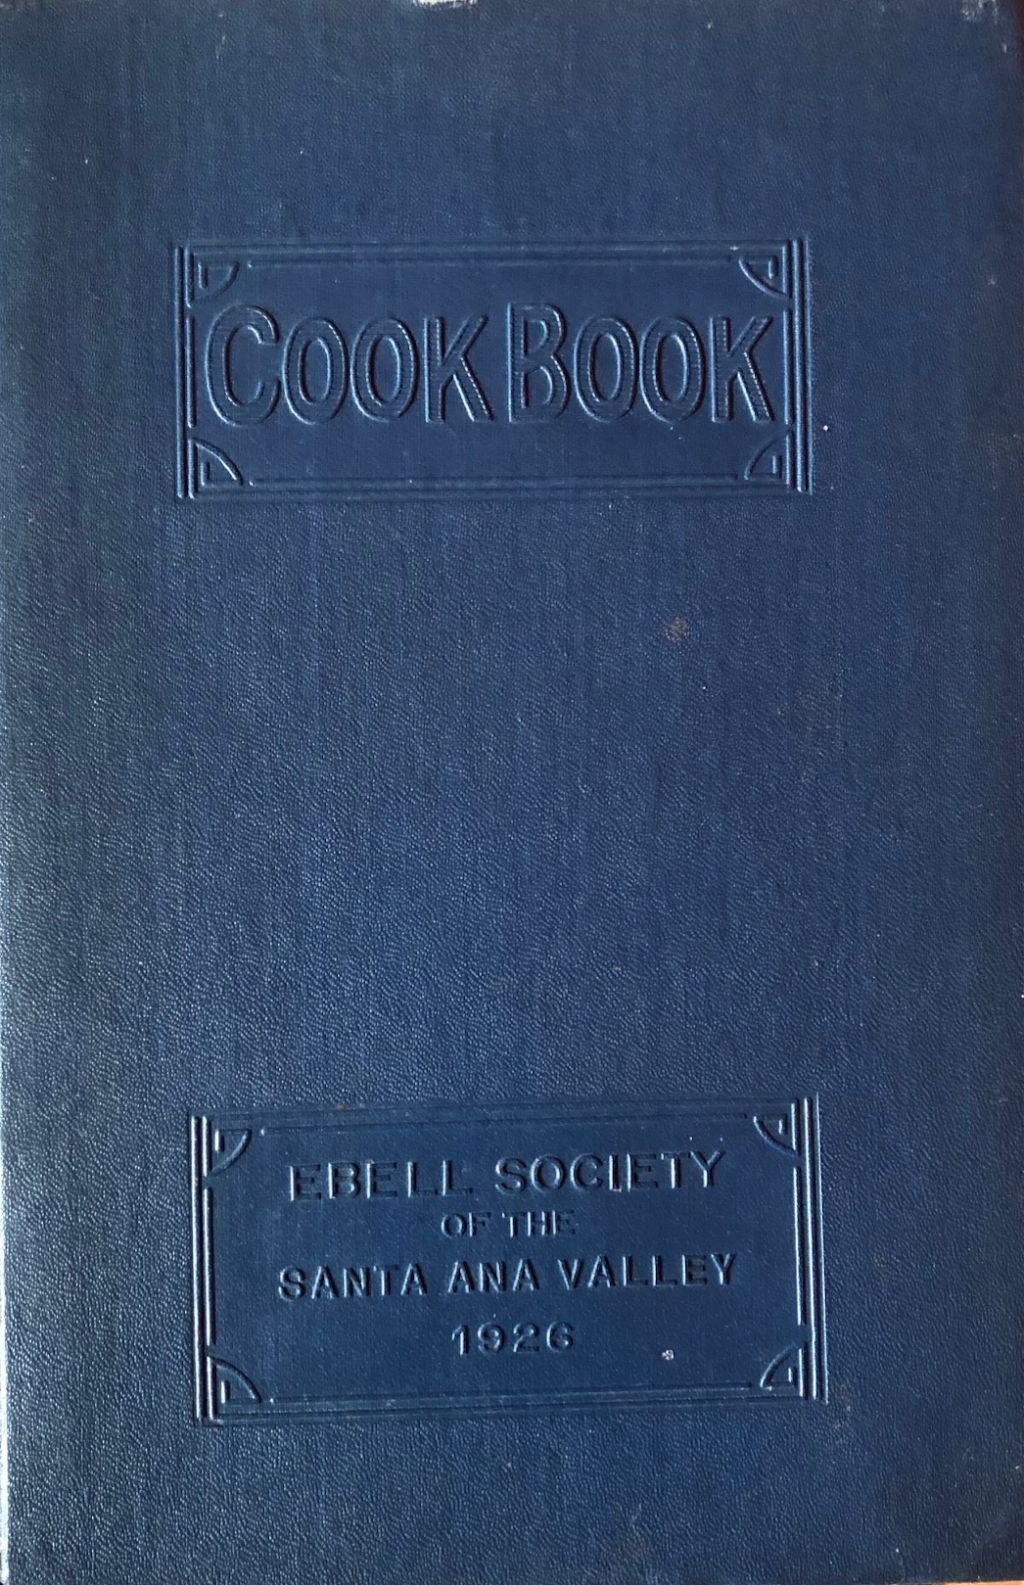 (California - Santa Ana) Ebell Society of the Santa Ana Valley. Cook Book.